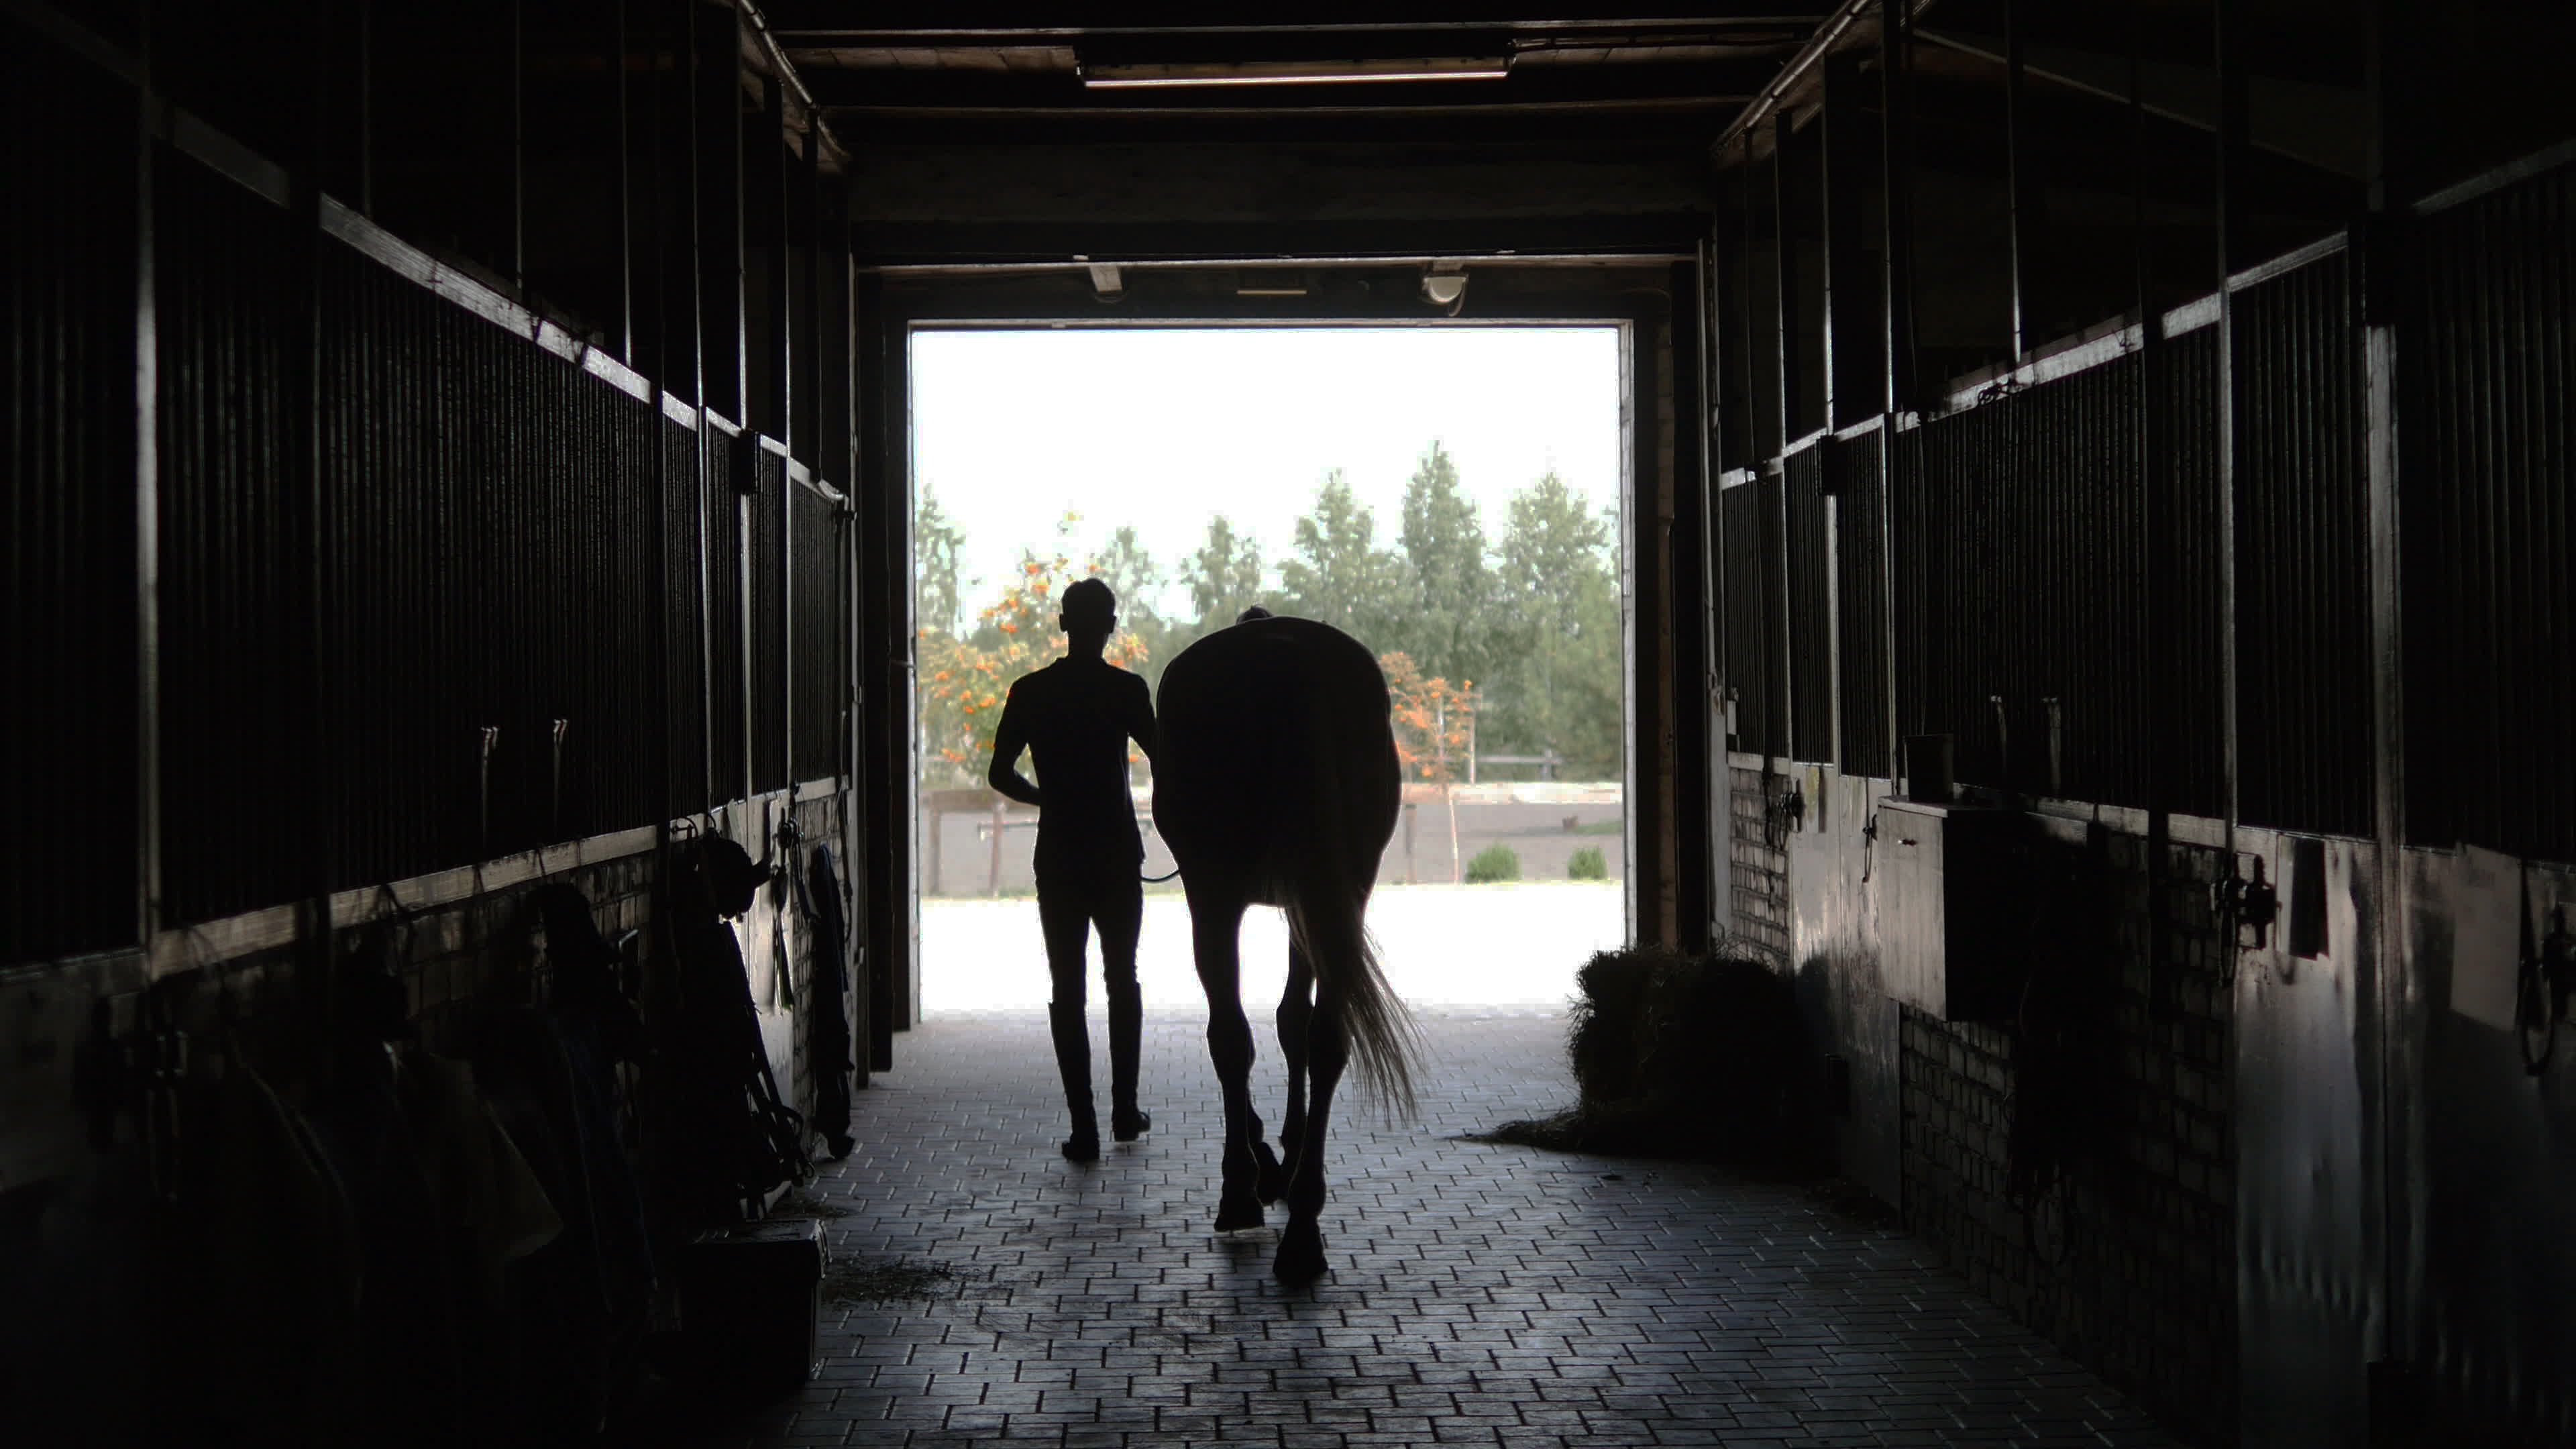 A person walking a horse through a barn, seen in the shadows. 